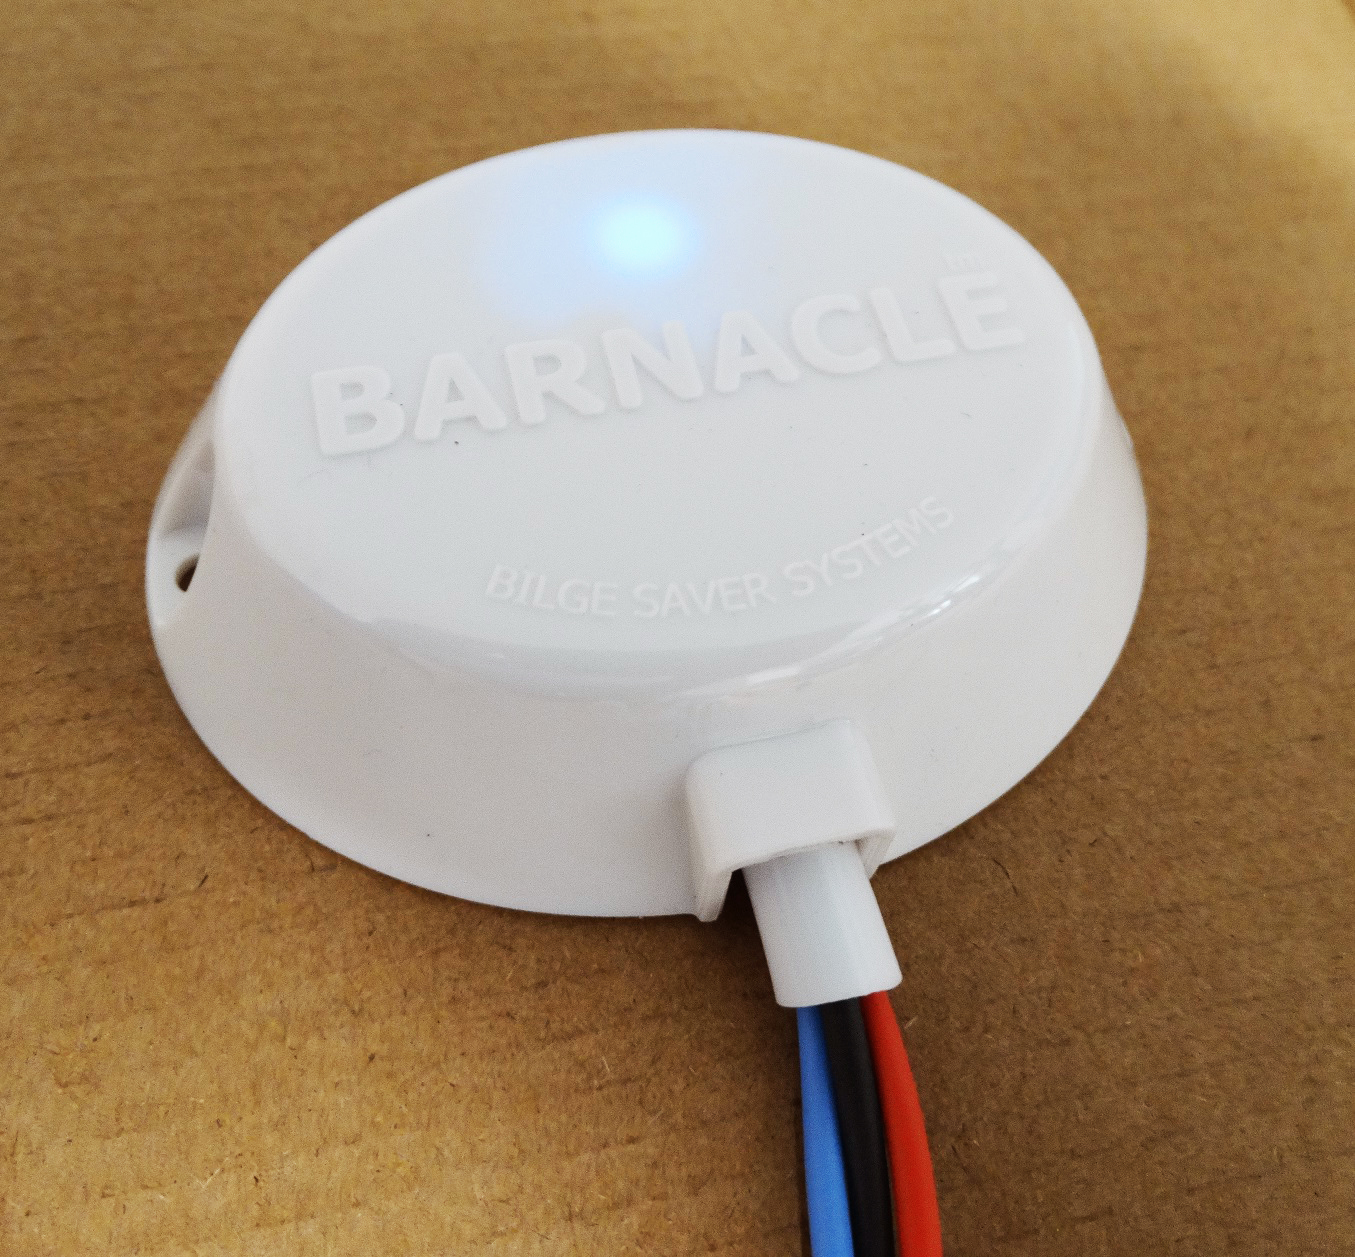 Barnacle active light